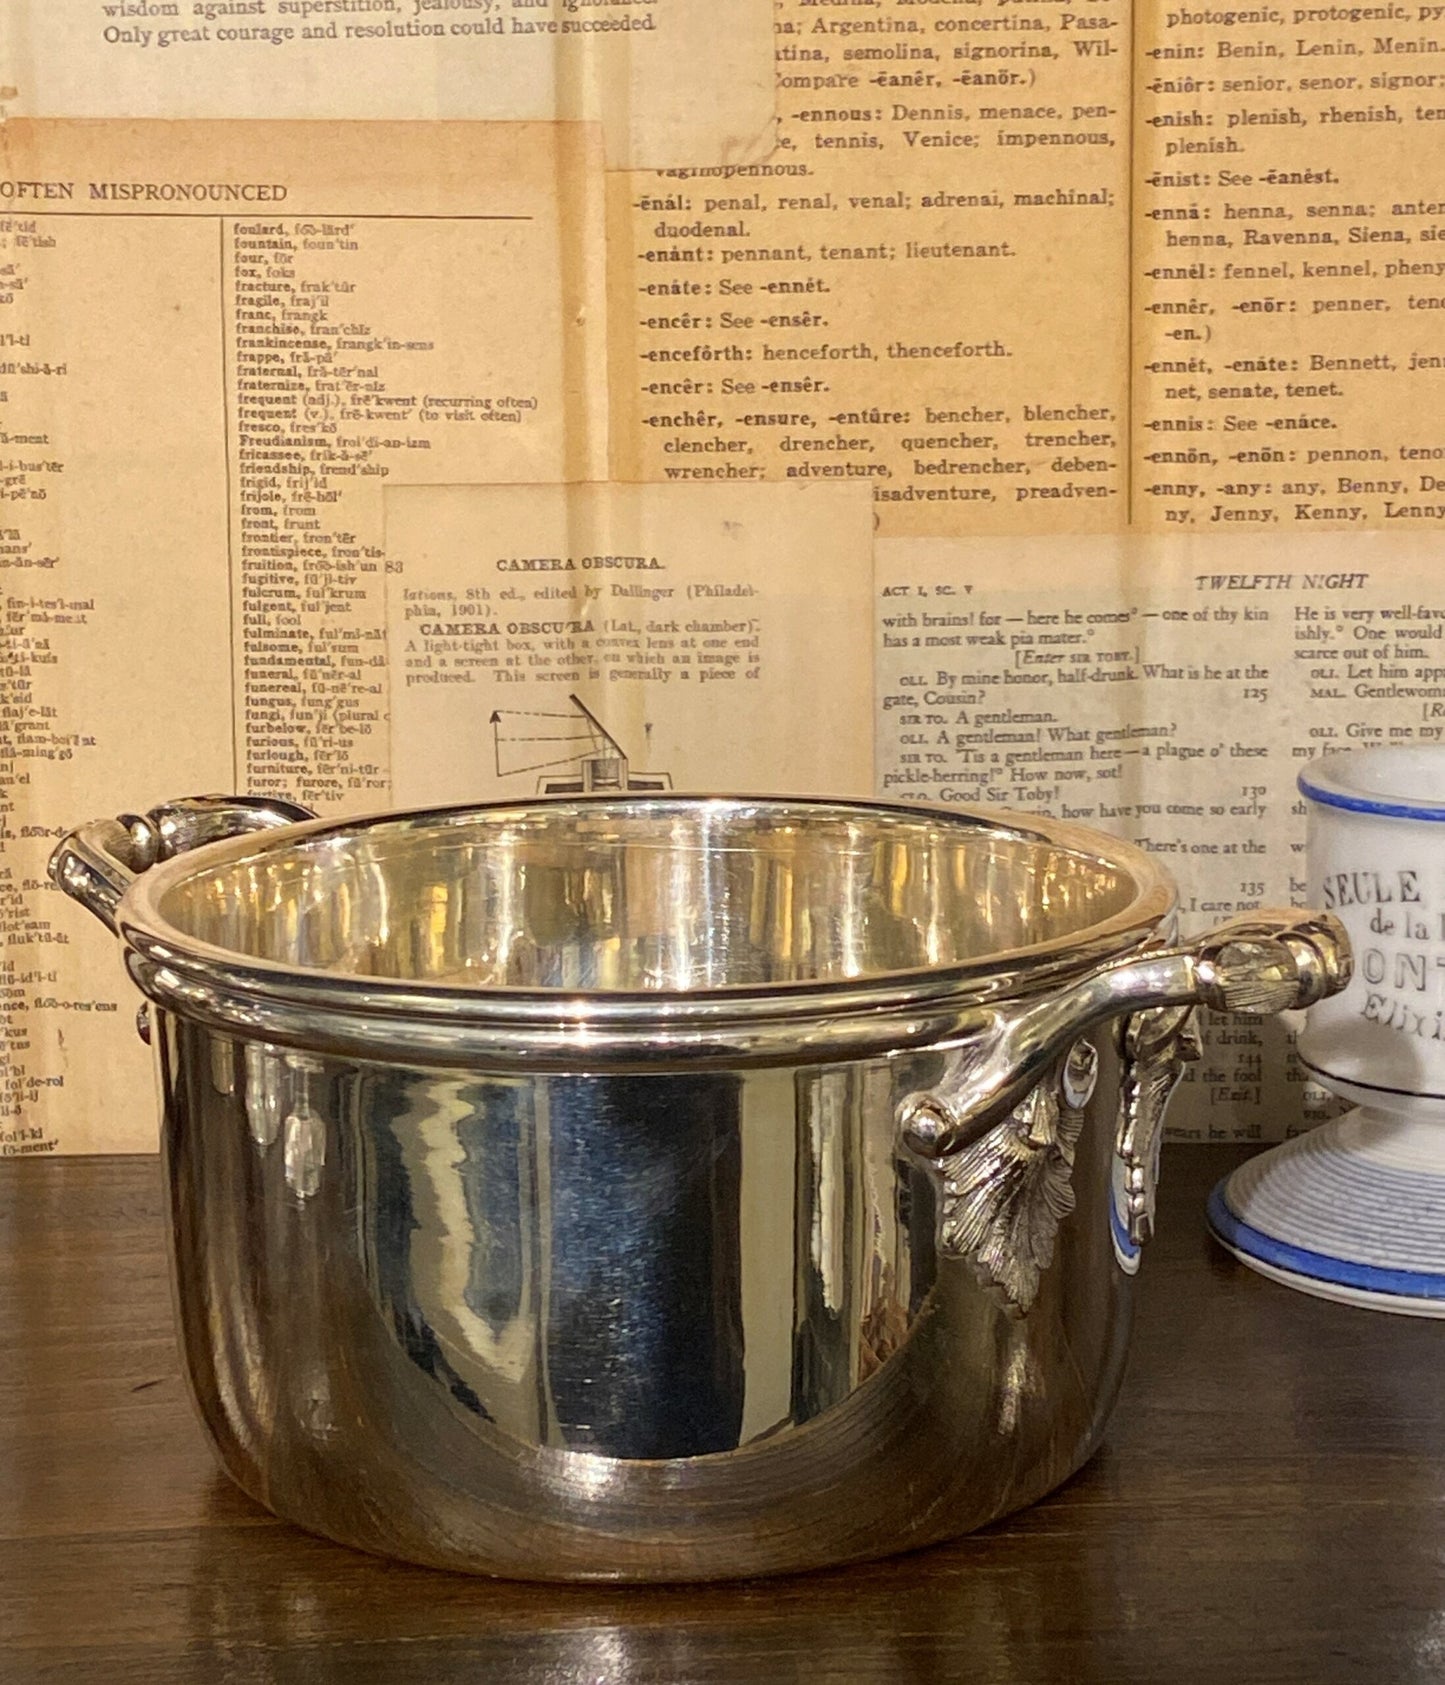 Vintage Hotel Silver Souflee Dish